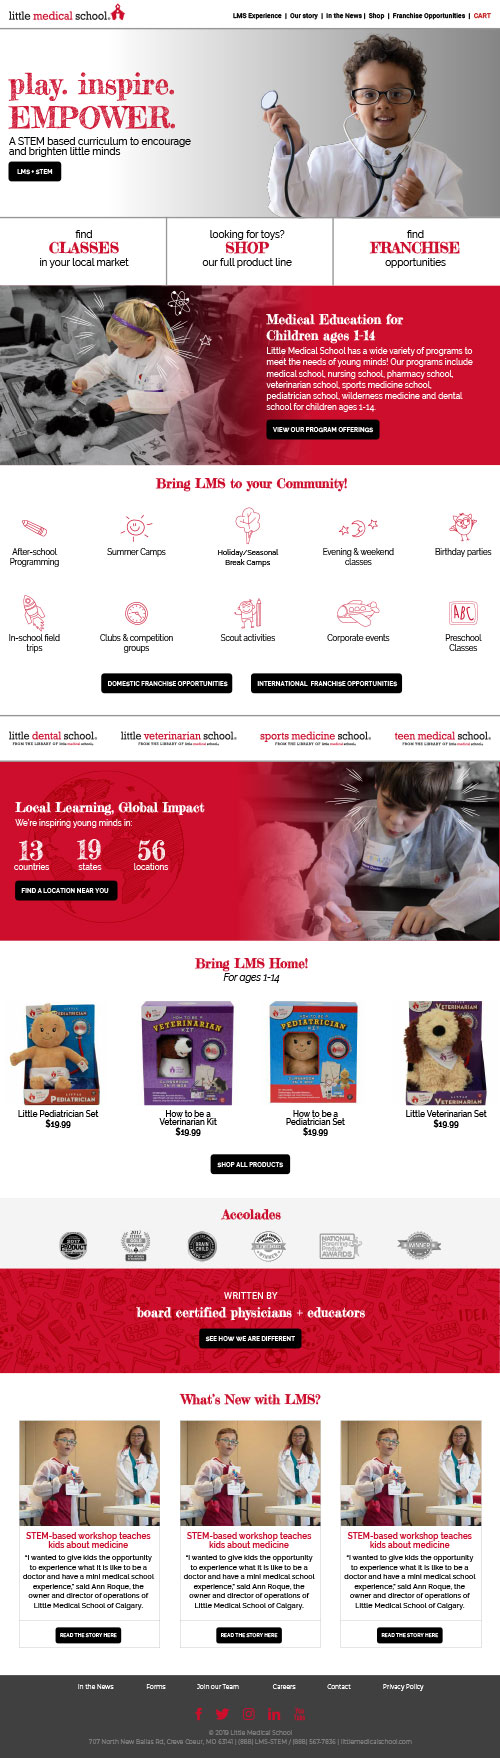 Medical toys store ecommerce website design